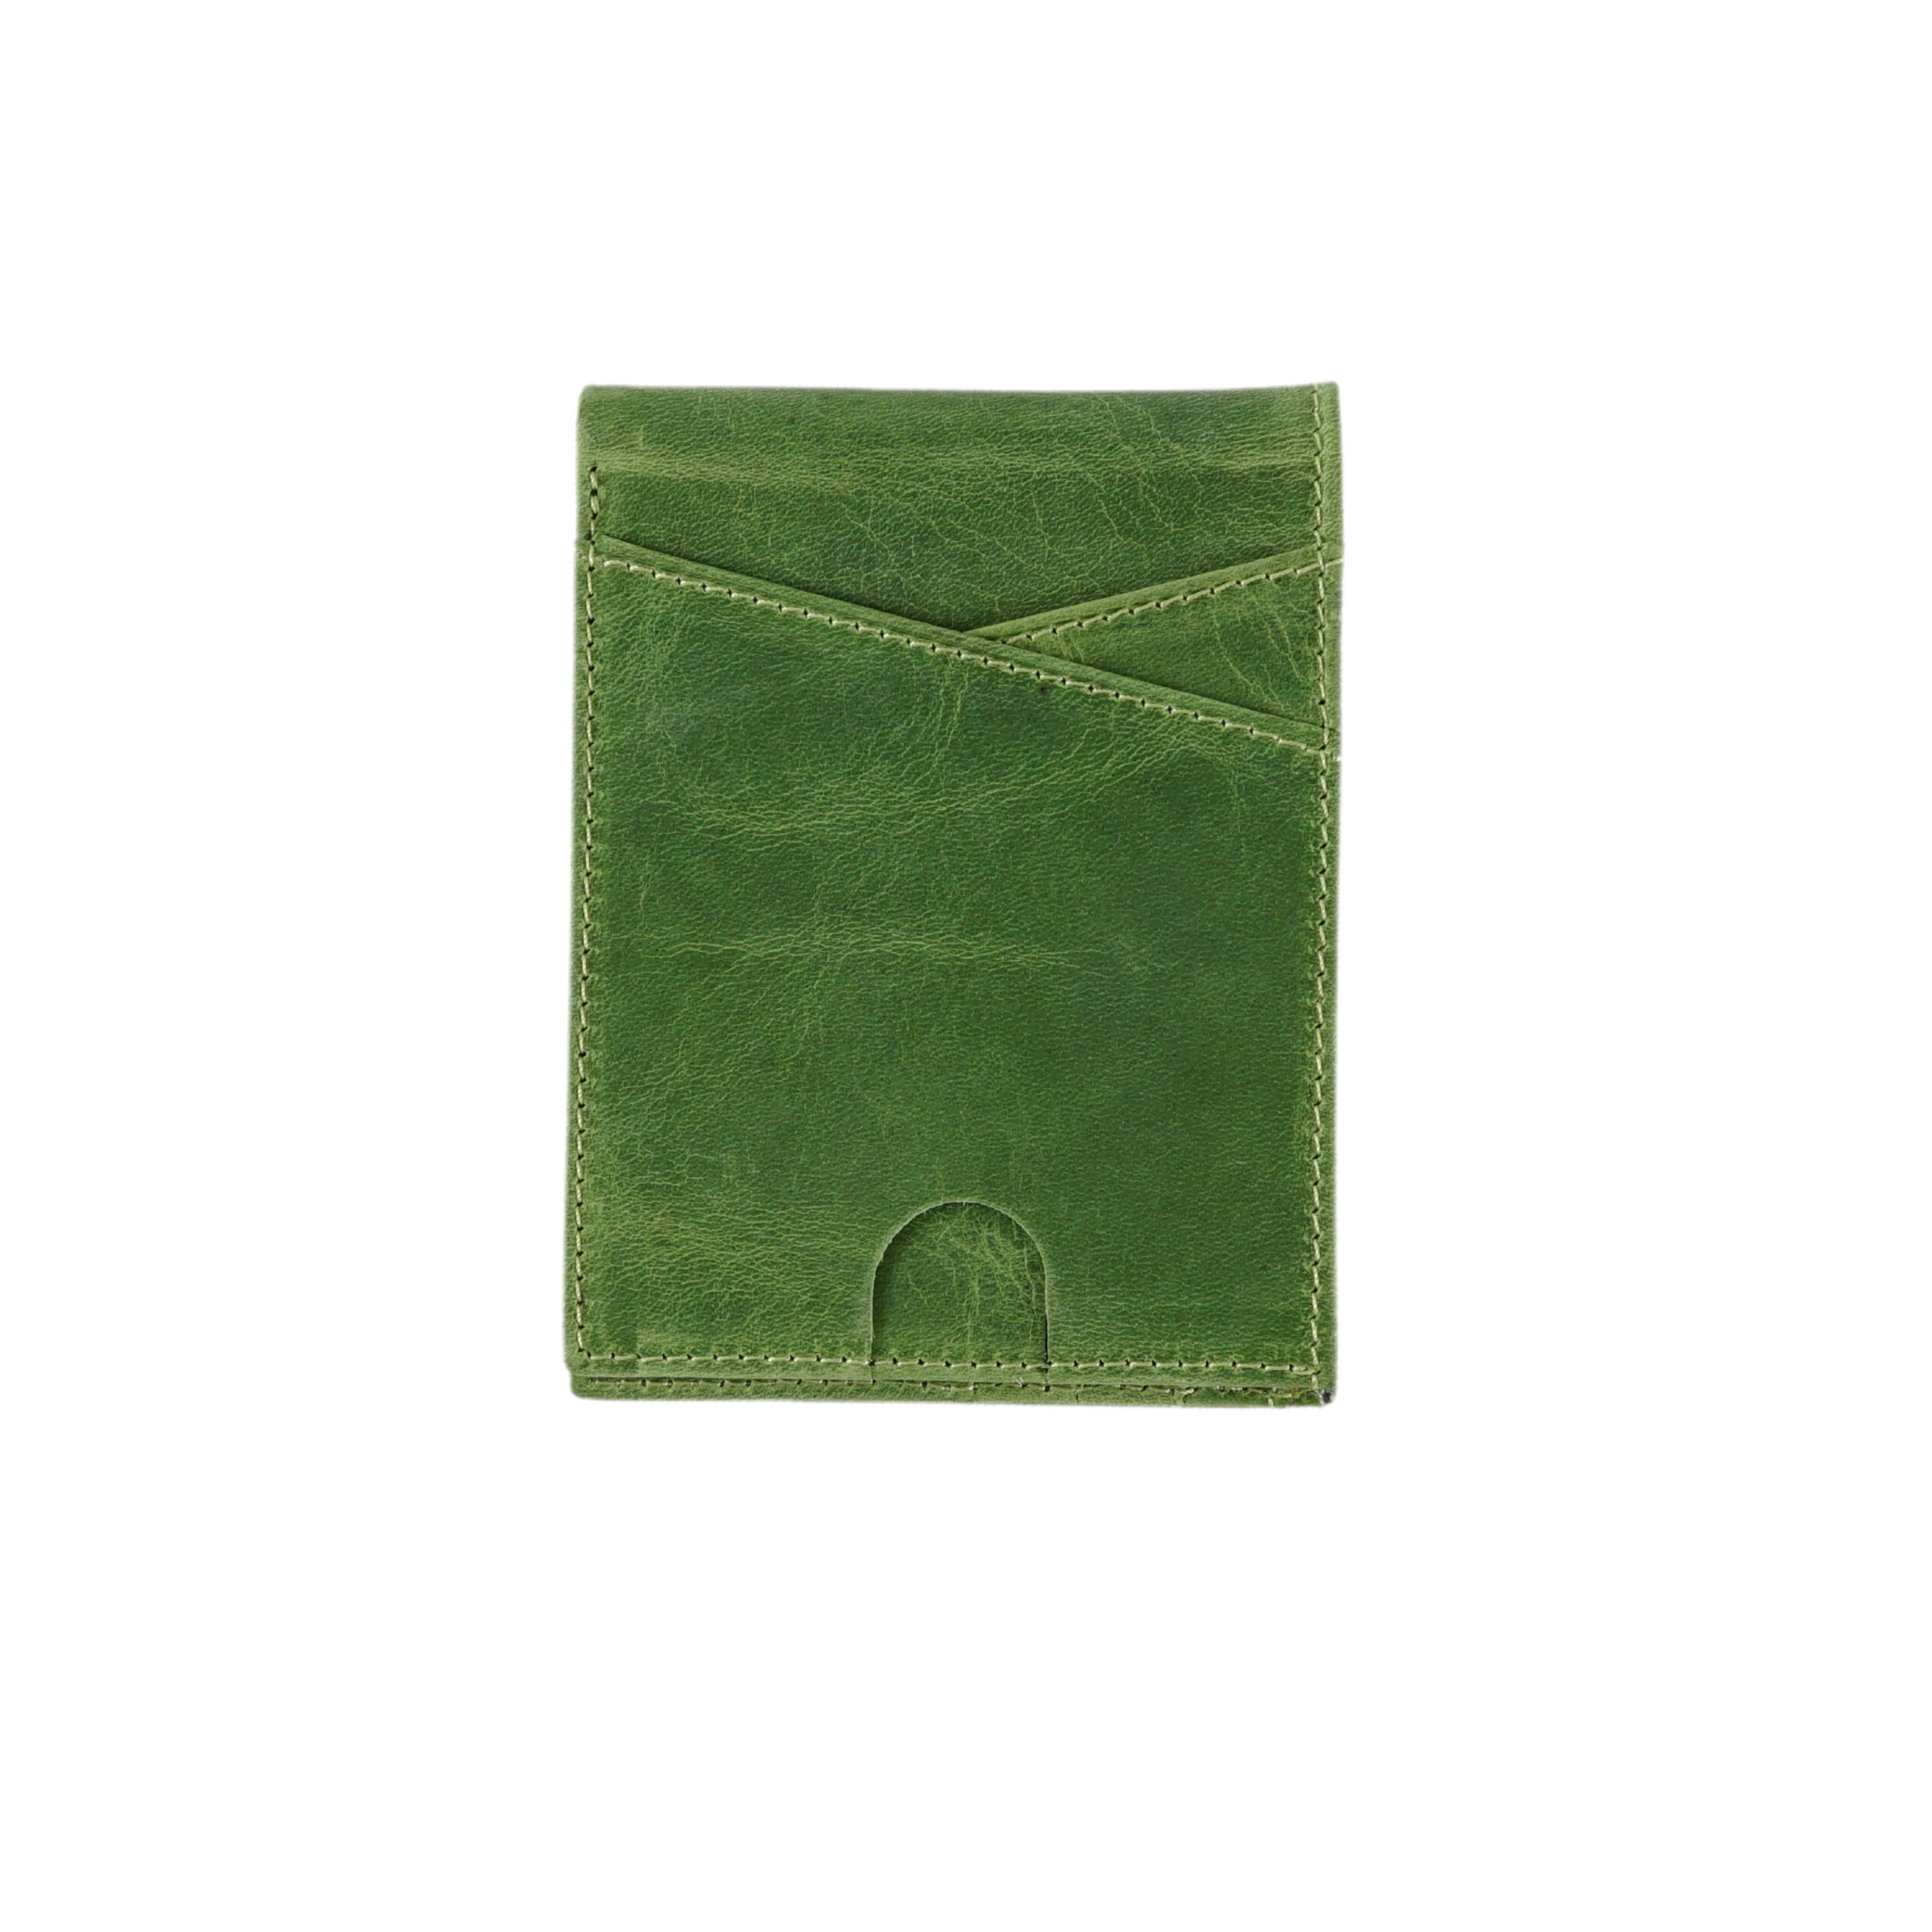 Genuine Leather Minimalist Wallet for Men - Green